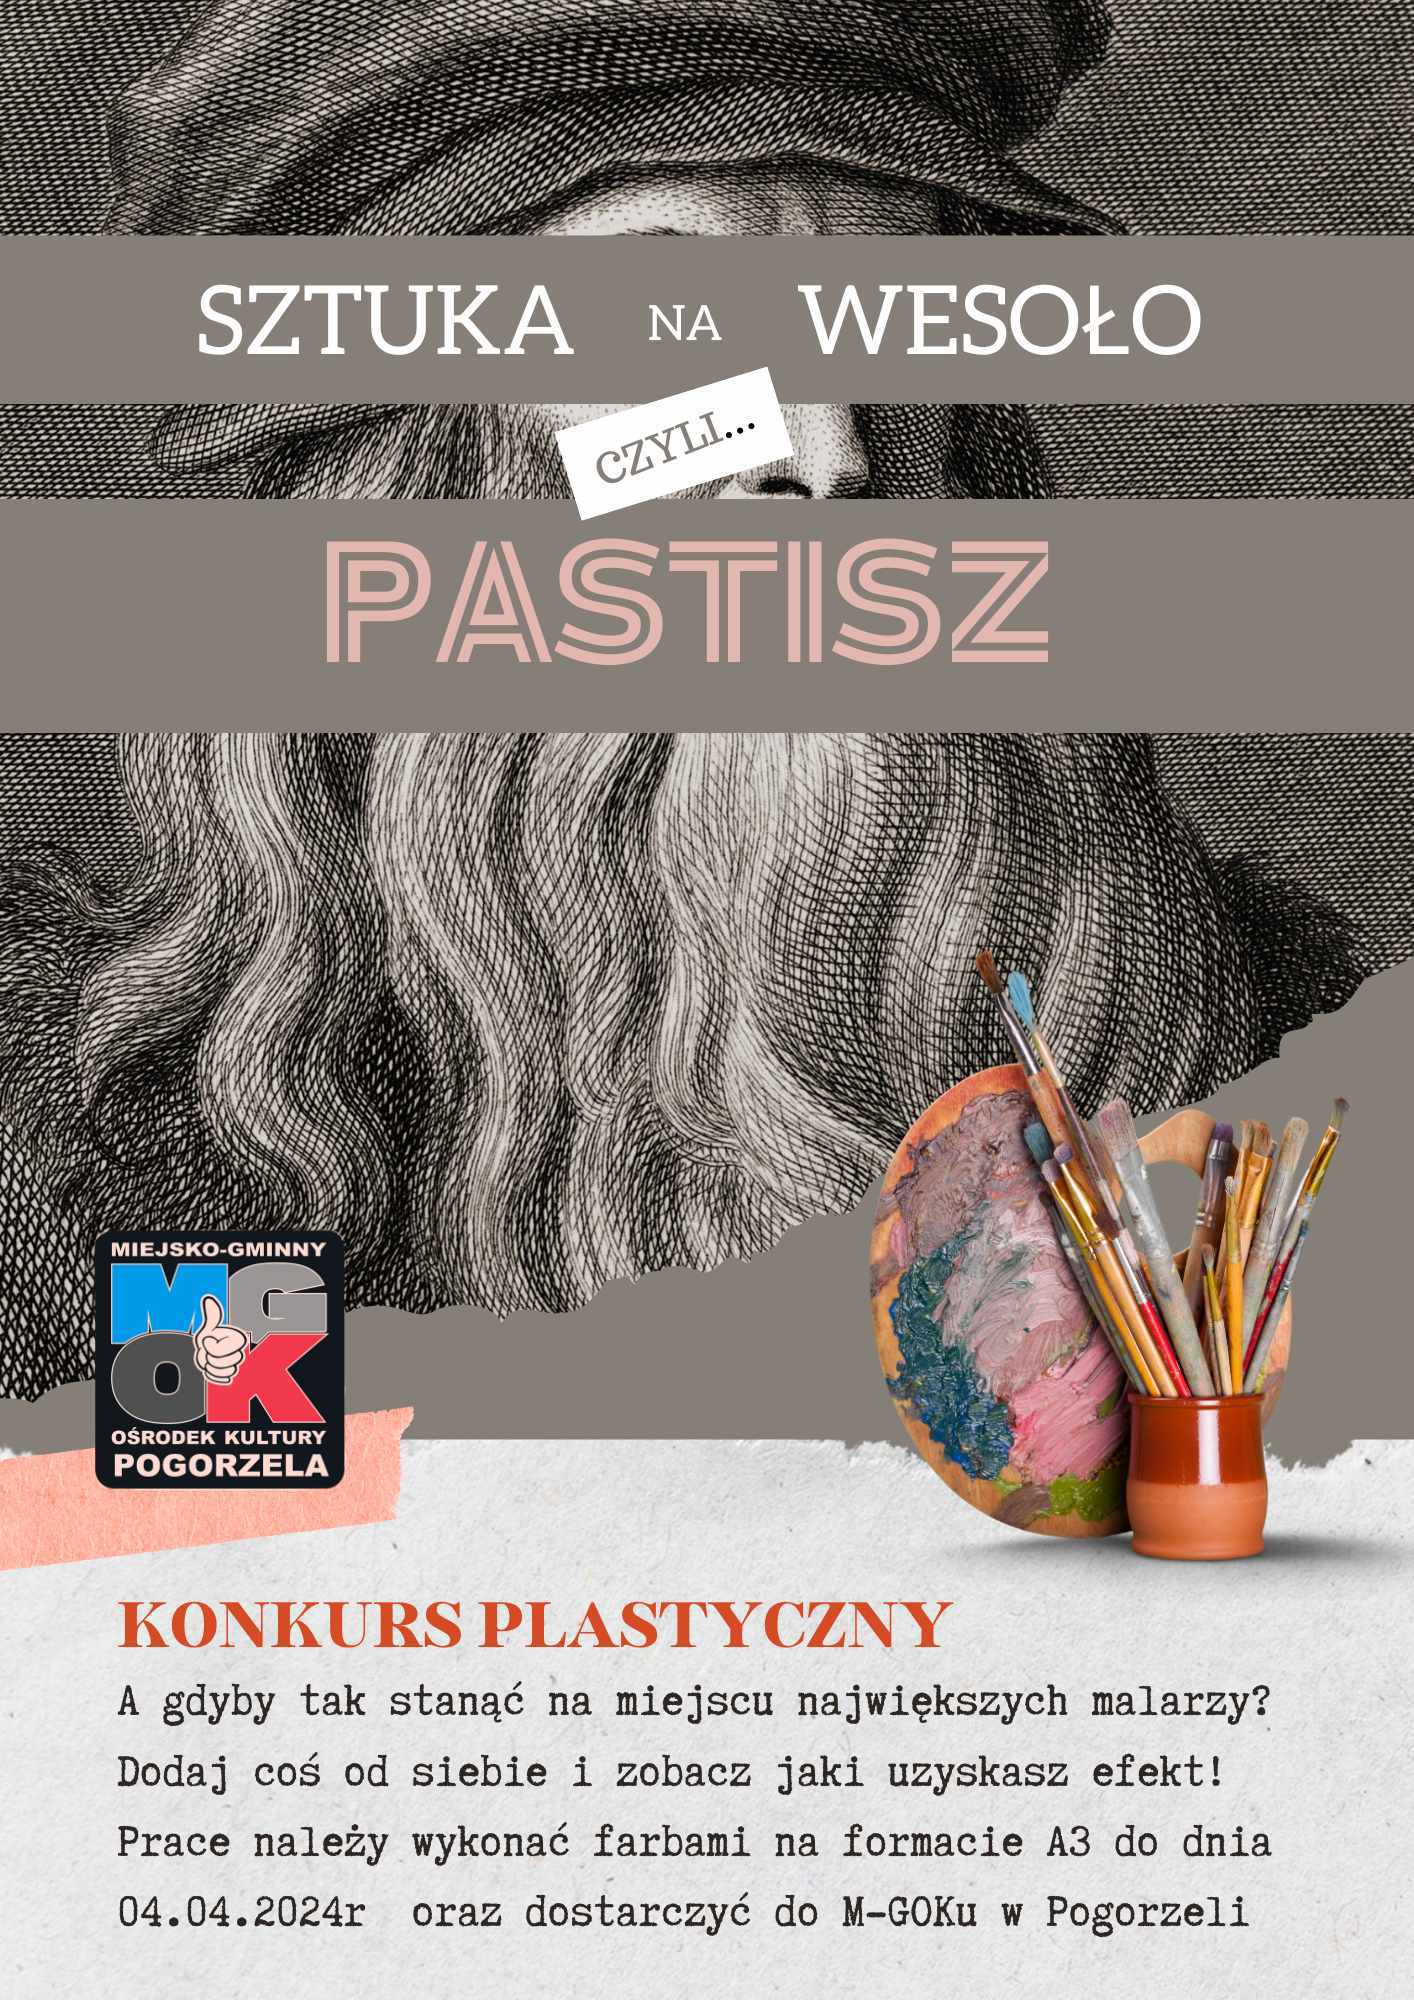 Read more about the article KONKURS PLASTYCZNY SZTUKA NA WESOŁO